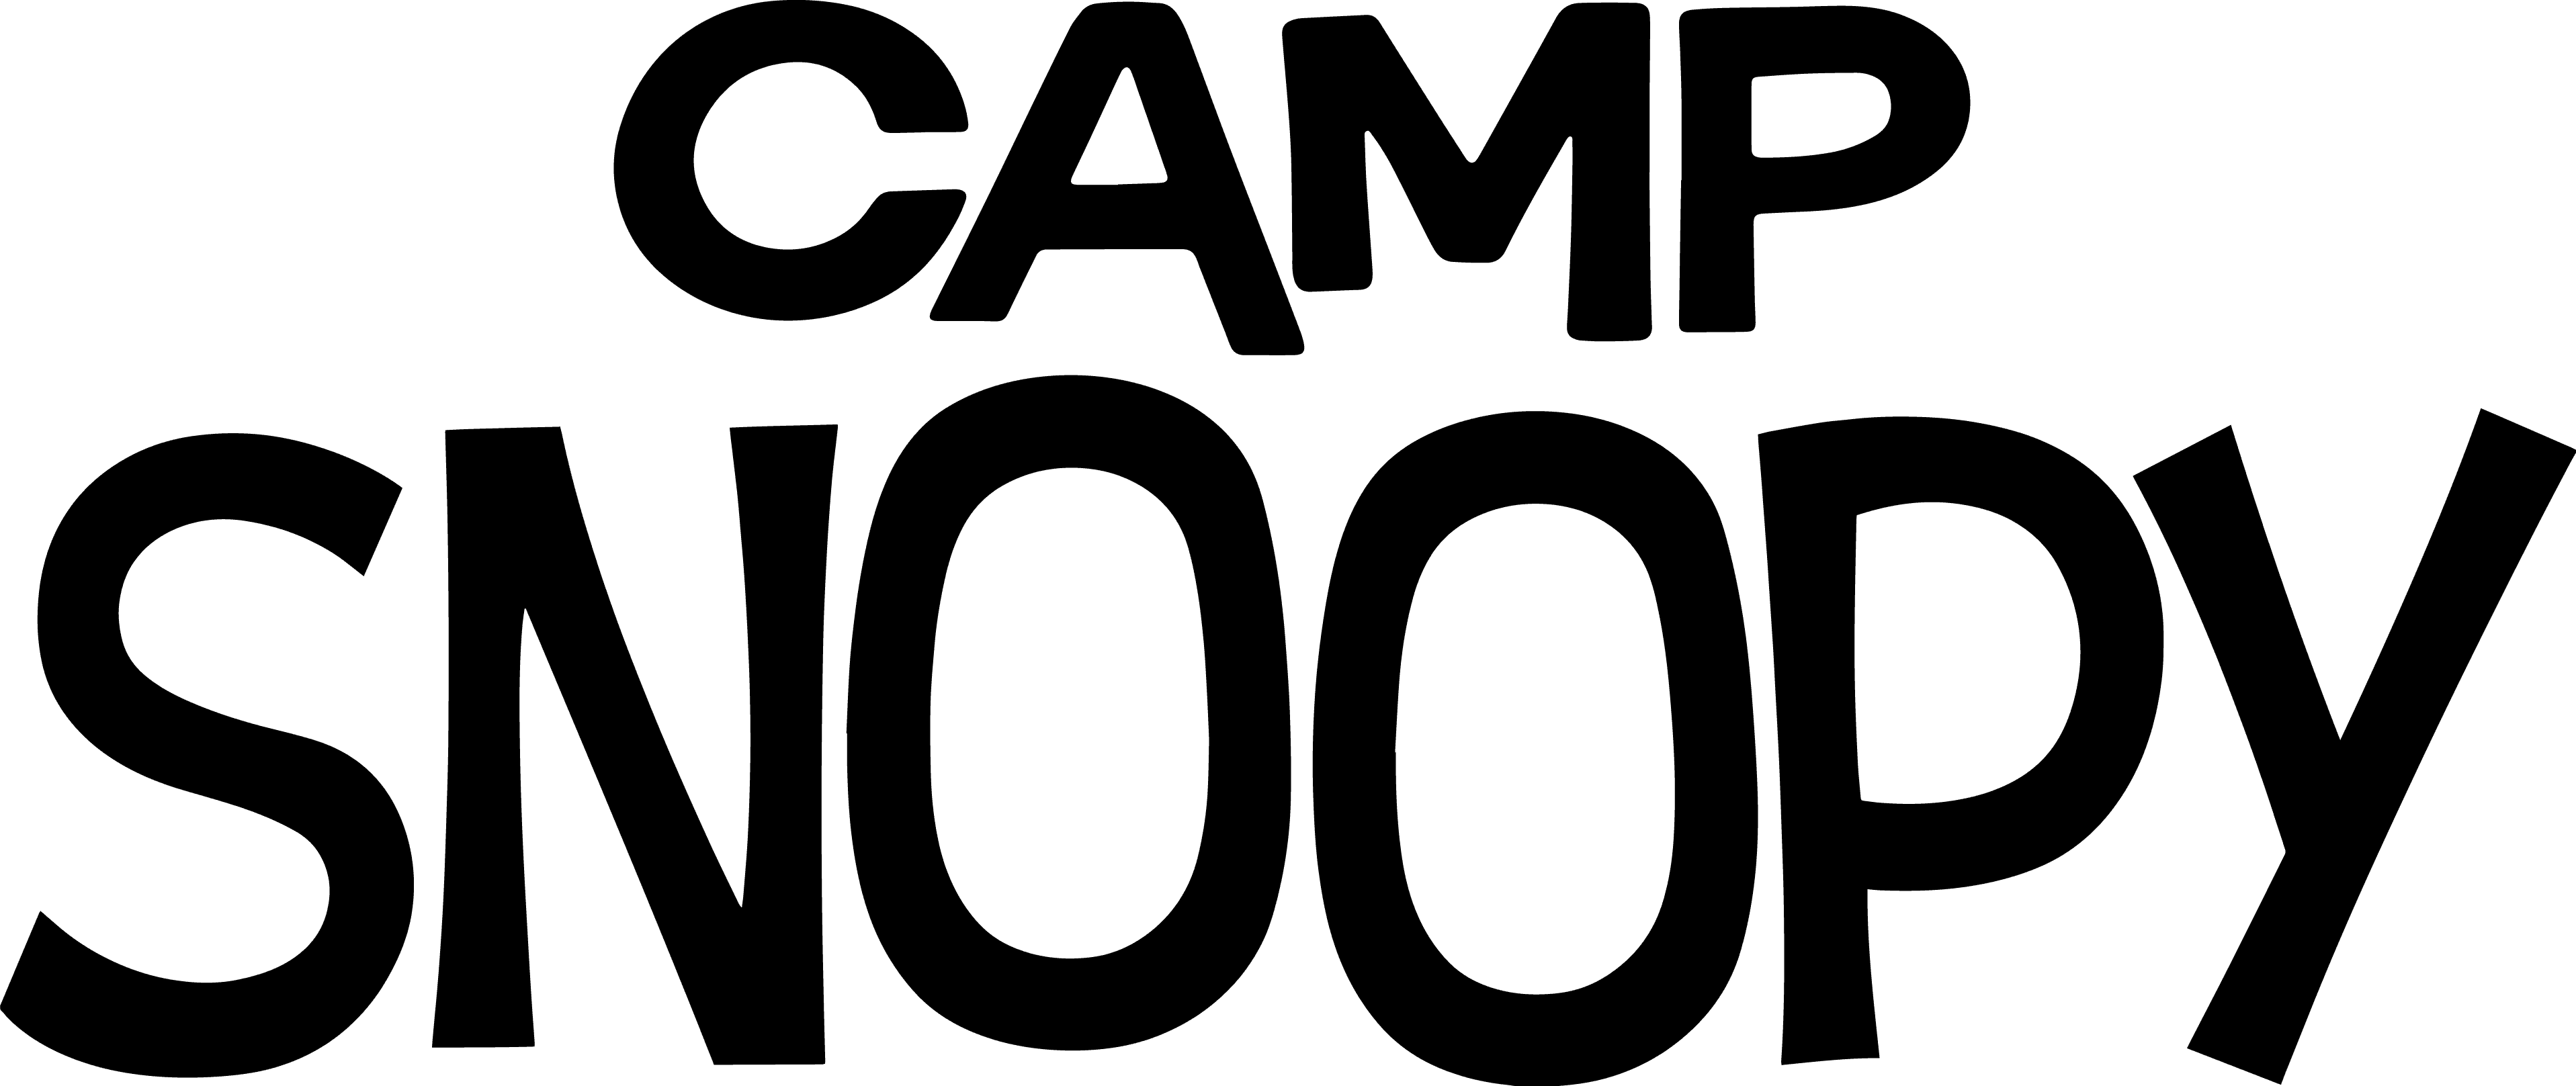 Camp Snoopy logo